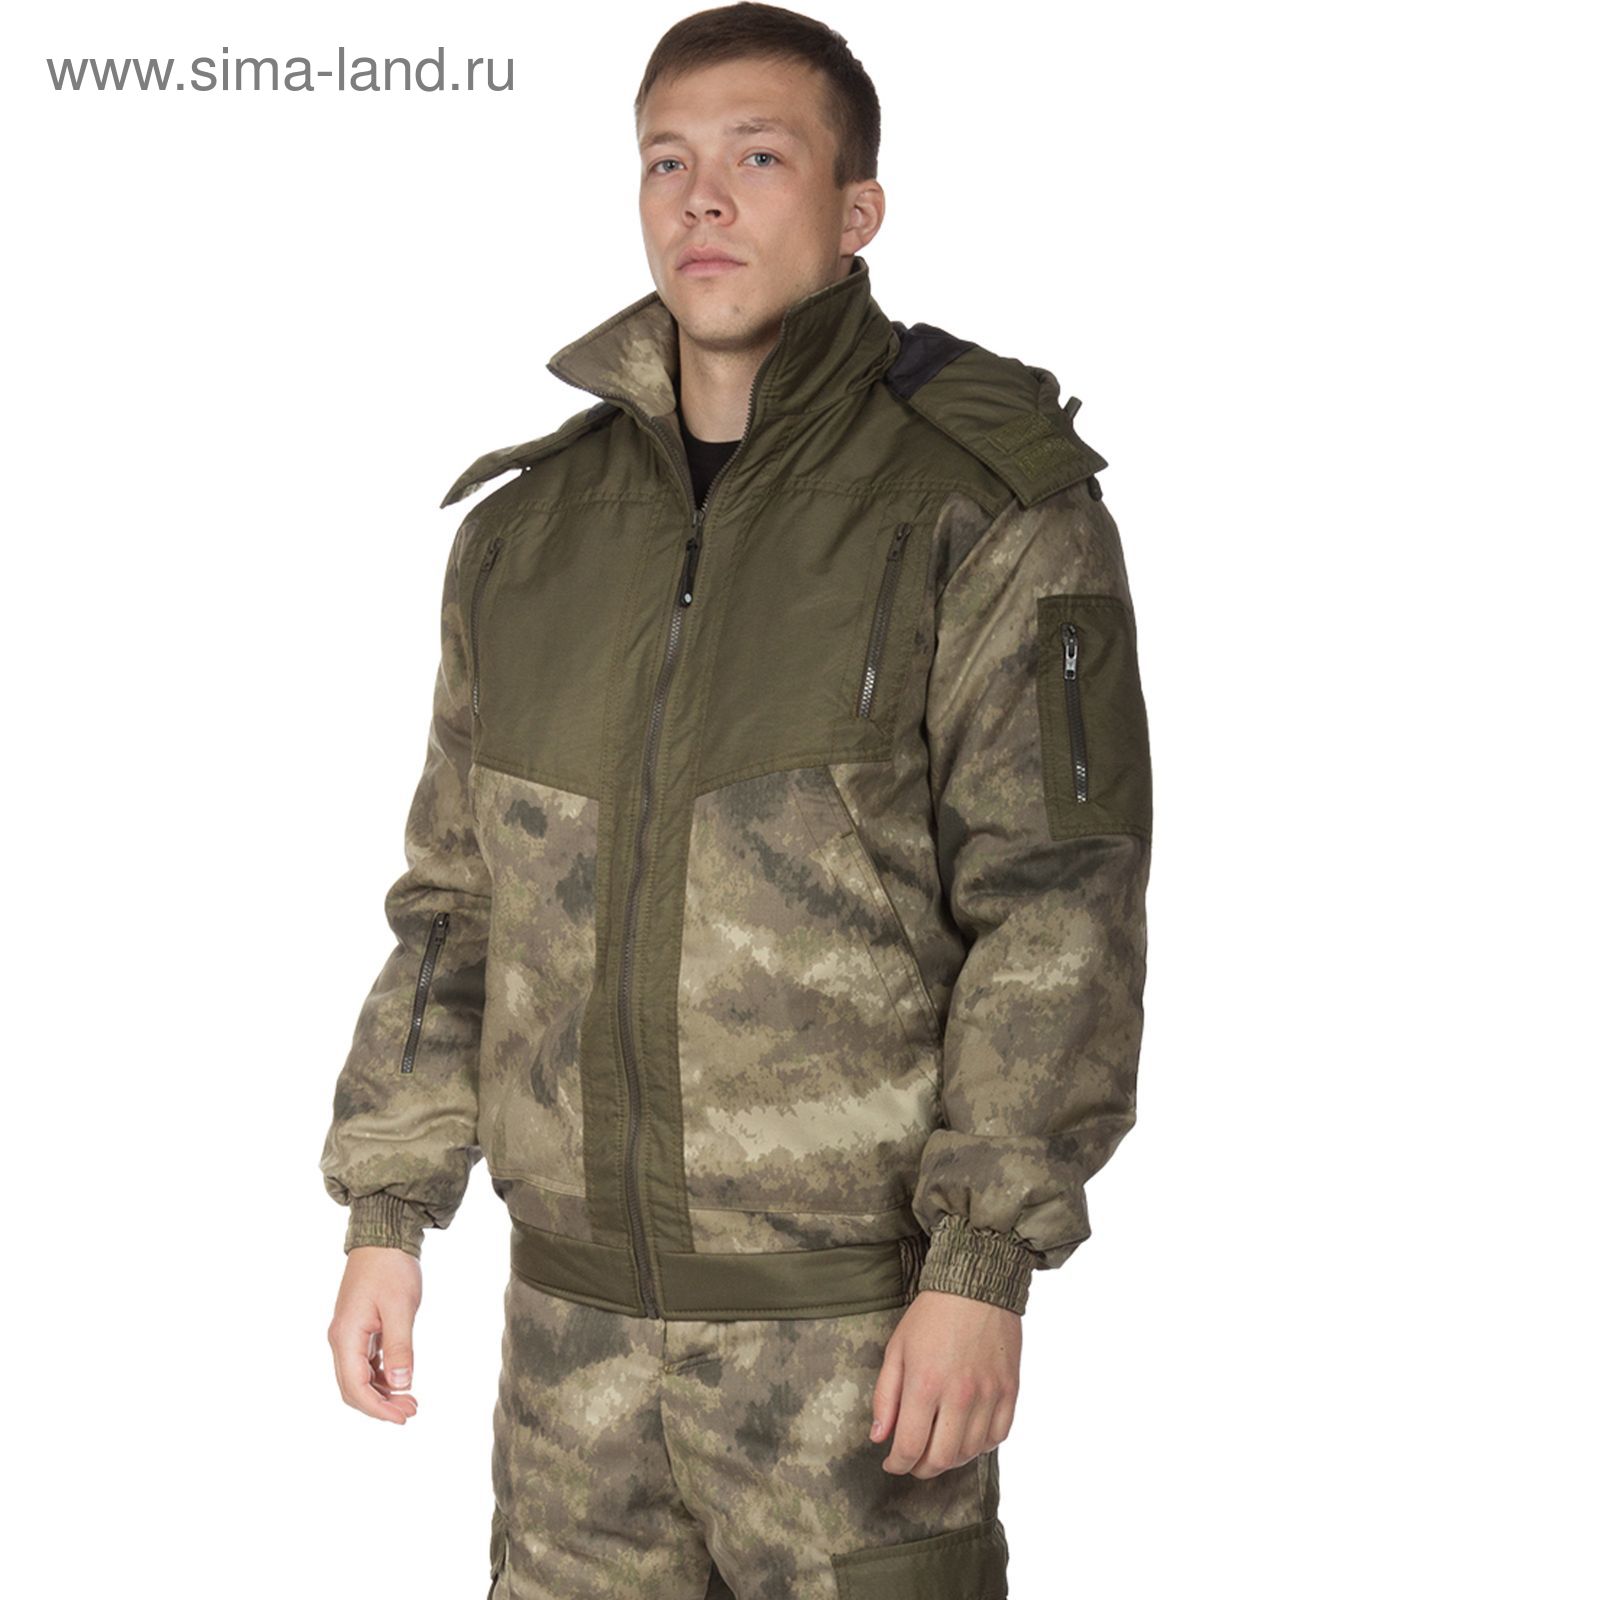 Куртка утеплённая «Тактика», размер 44-46, рост 170-176 см